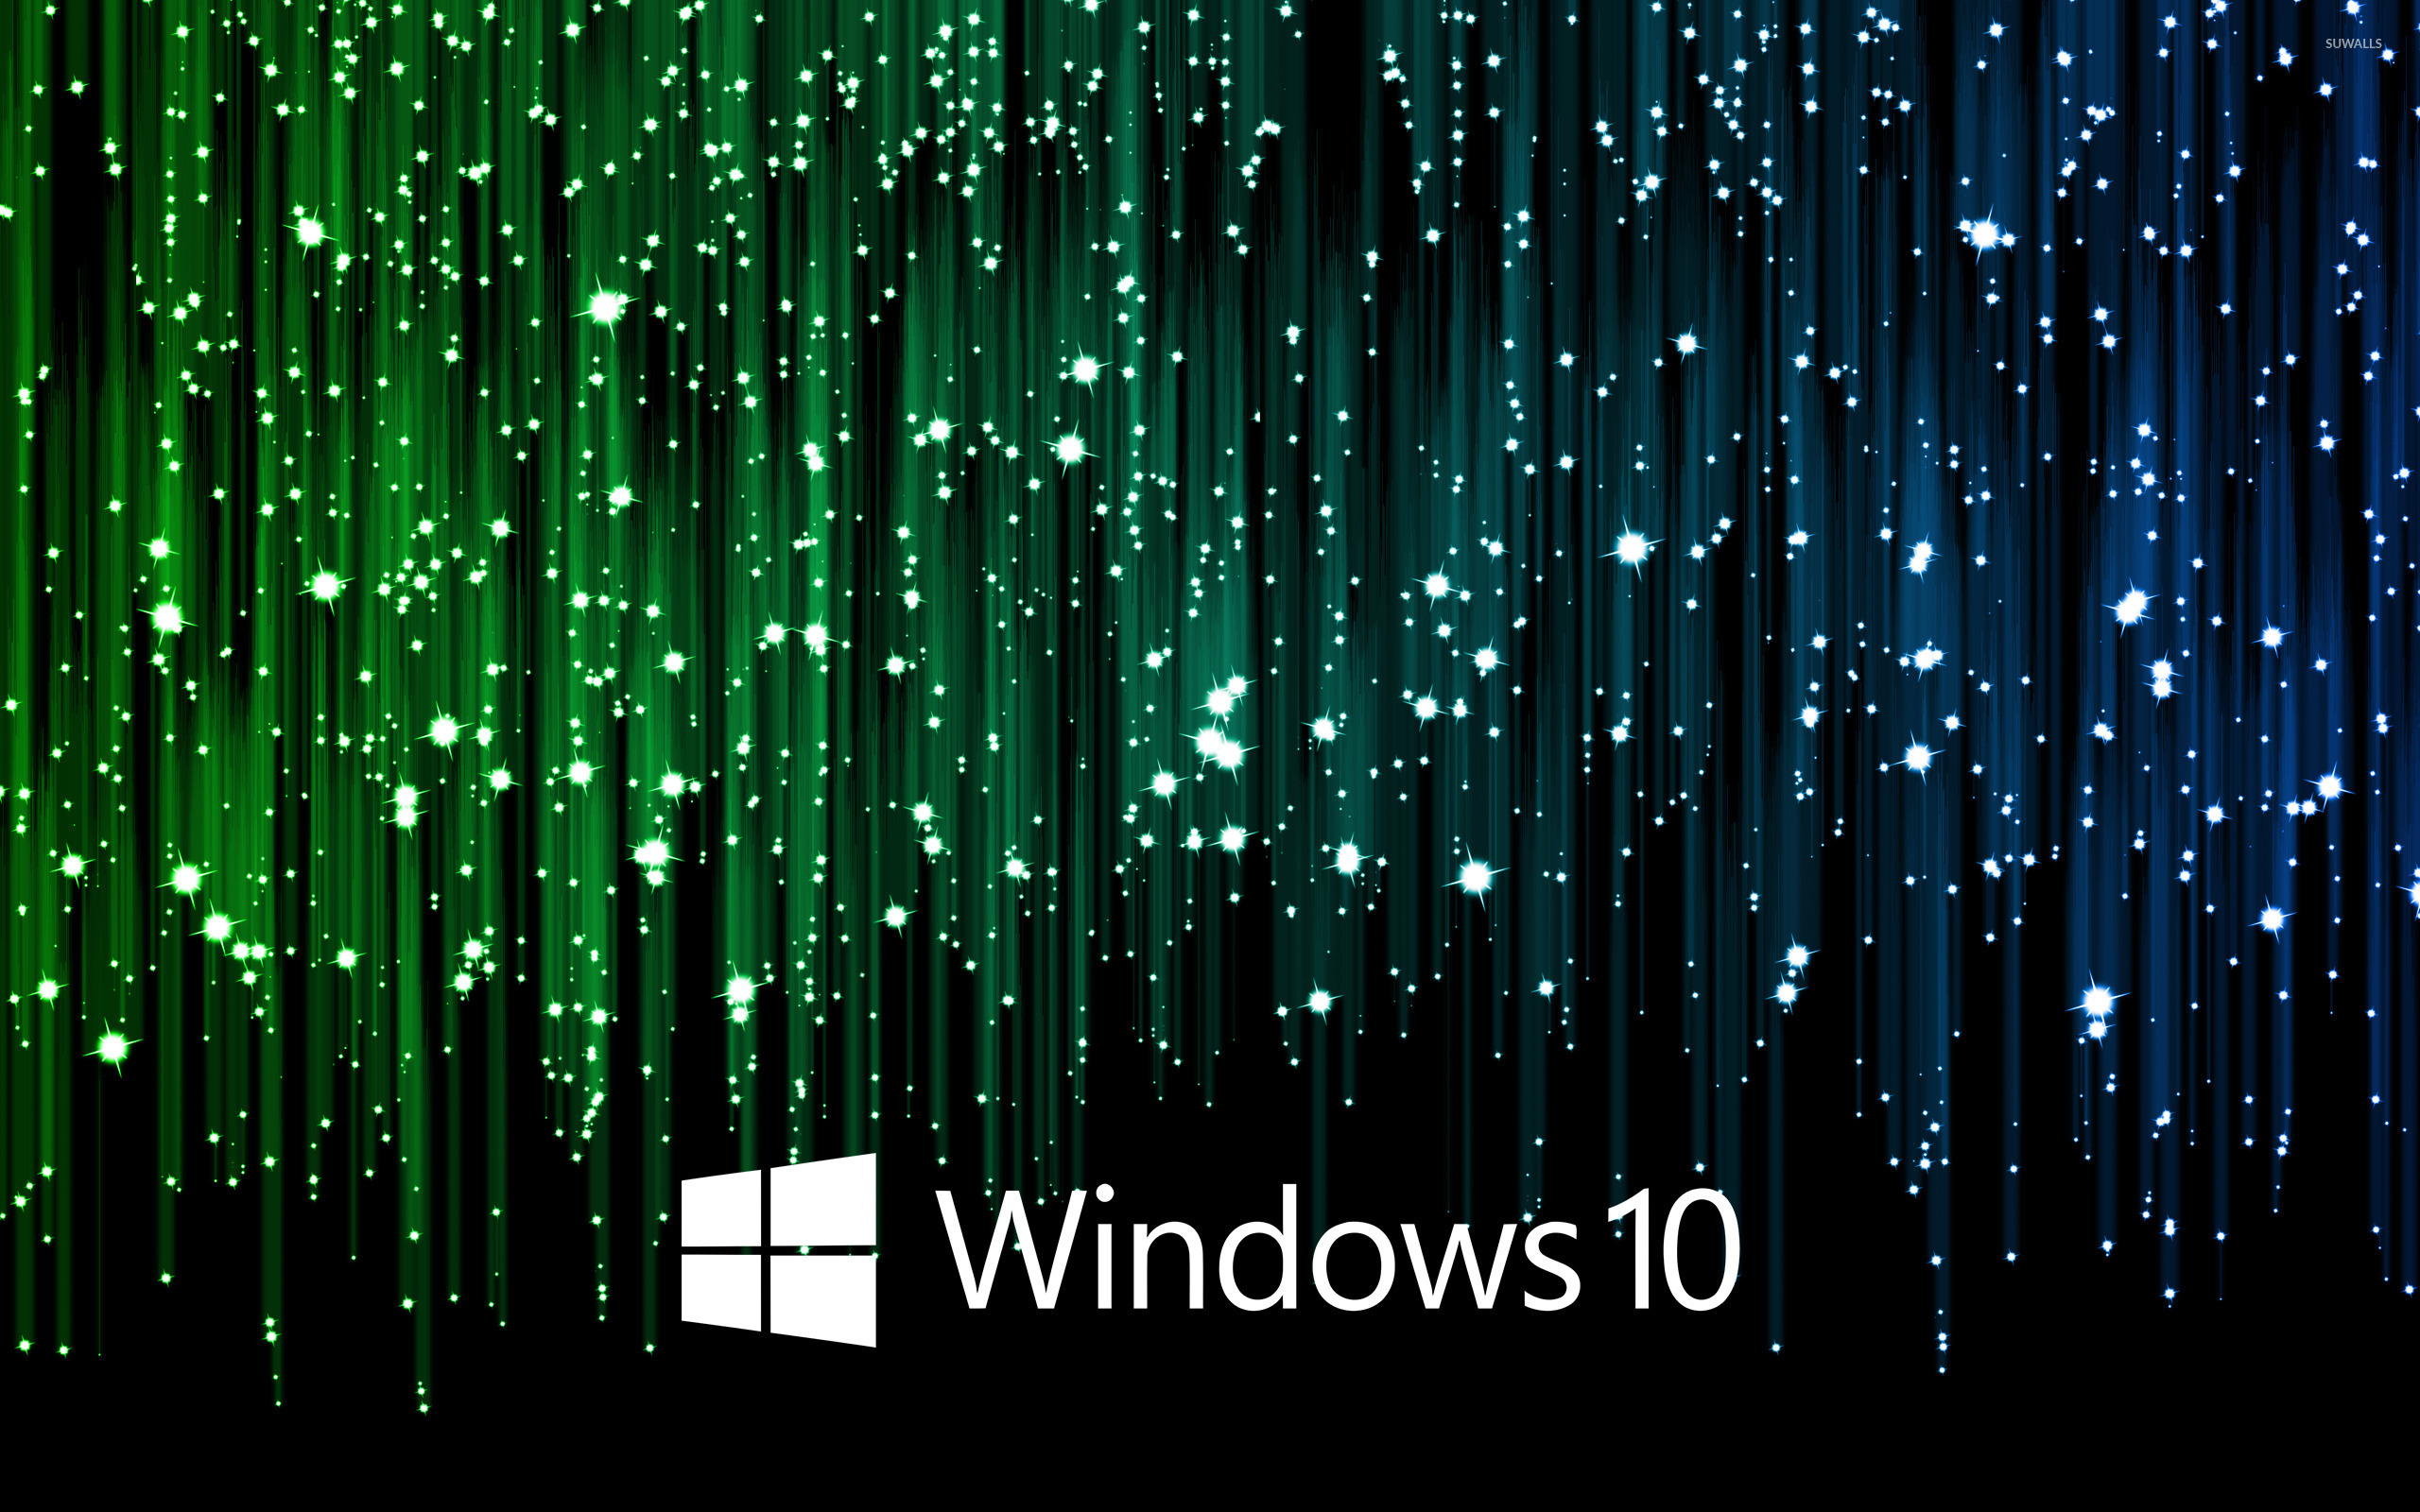 Windows 10 White Text Logo On Meteor Shower Wallpaper Computer